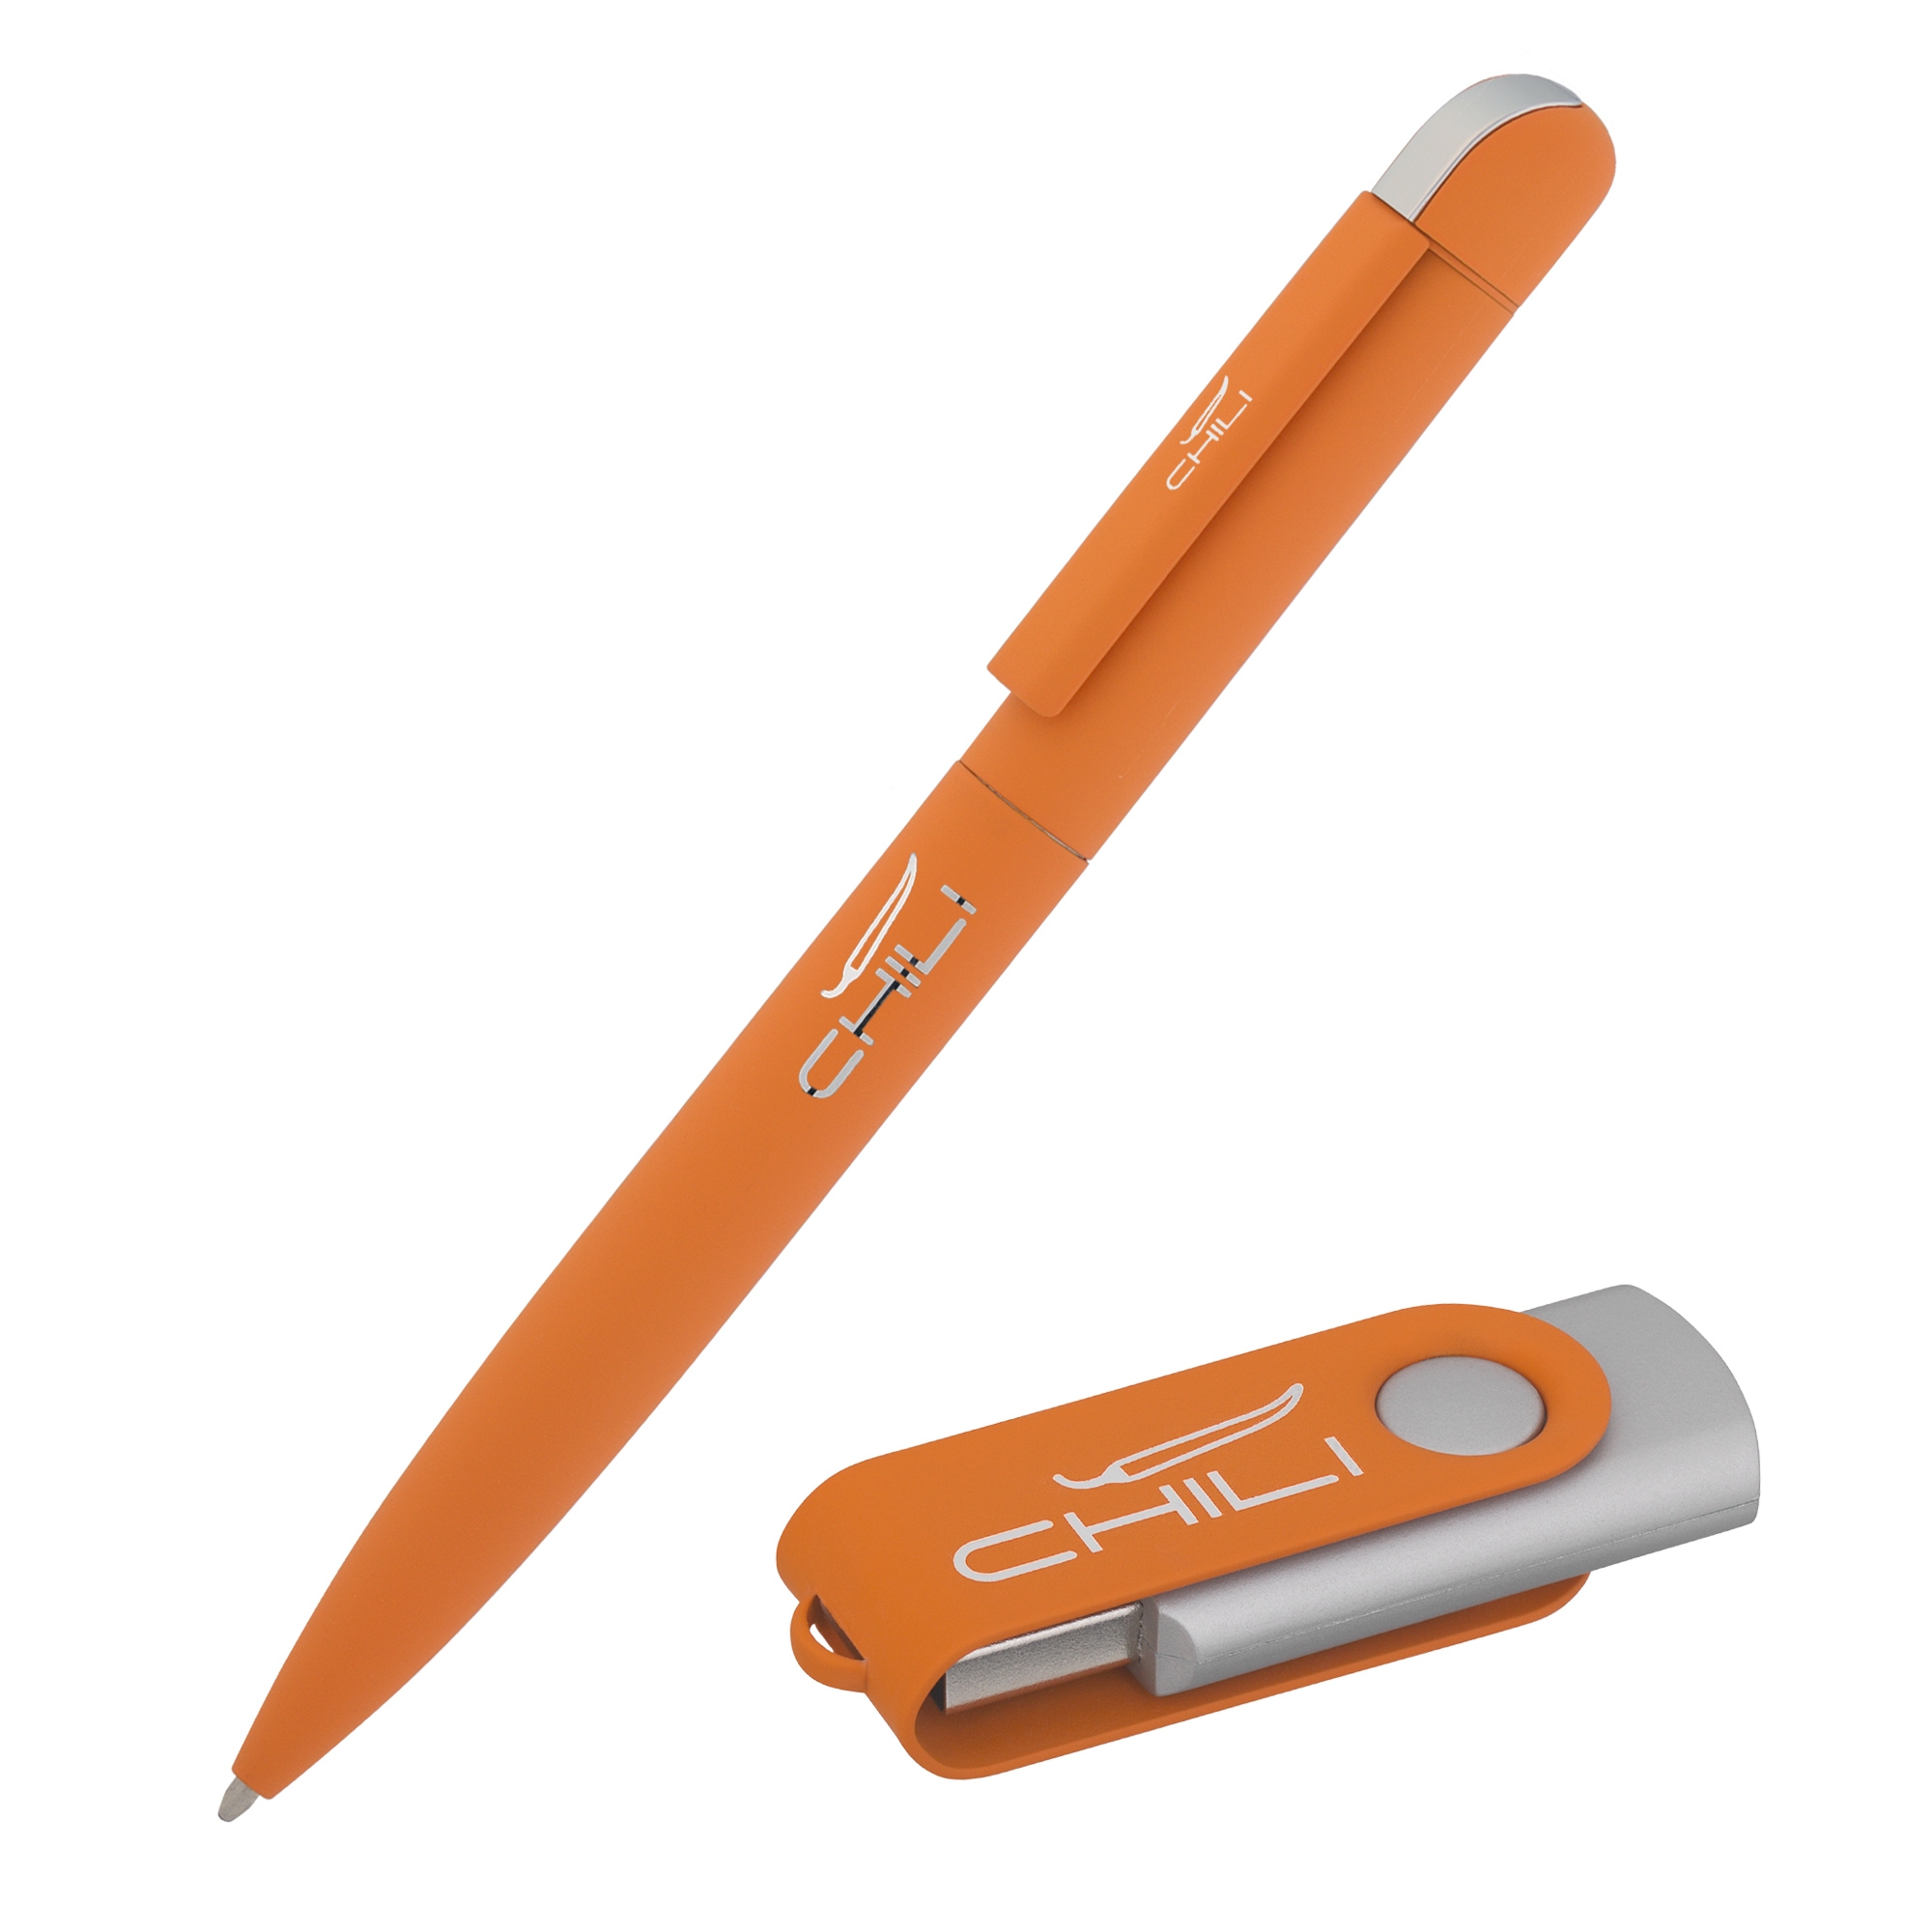 Набор ручка "Jupiter" + флеш-карта "Vostok" 8 Гб в футляре, покрытие soft touch#, оранжевый, металл/soft touch